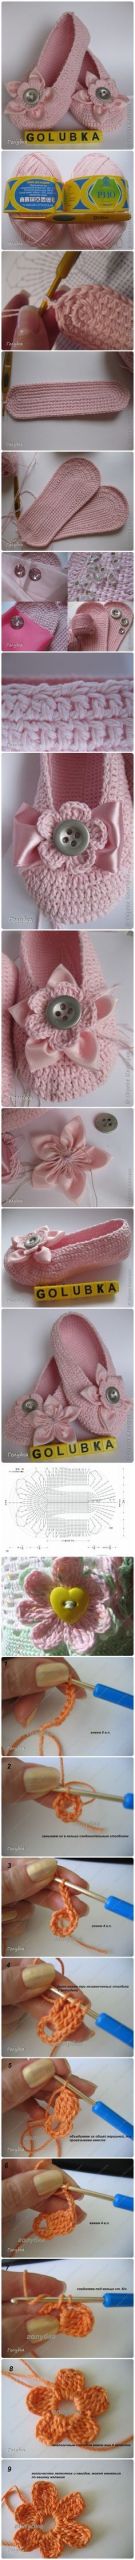 91c5c6a7aac9f4ca930f4fdbfa1ae955 crocheted slippers crochet shoes